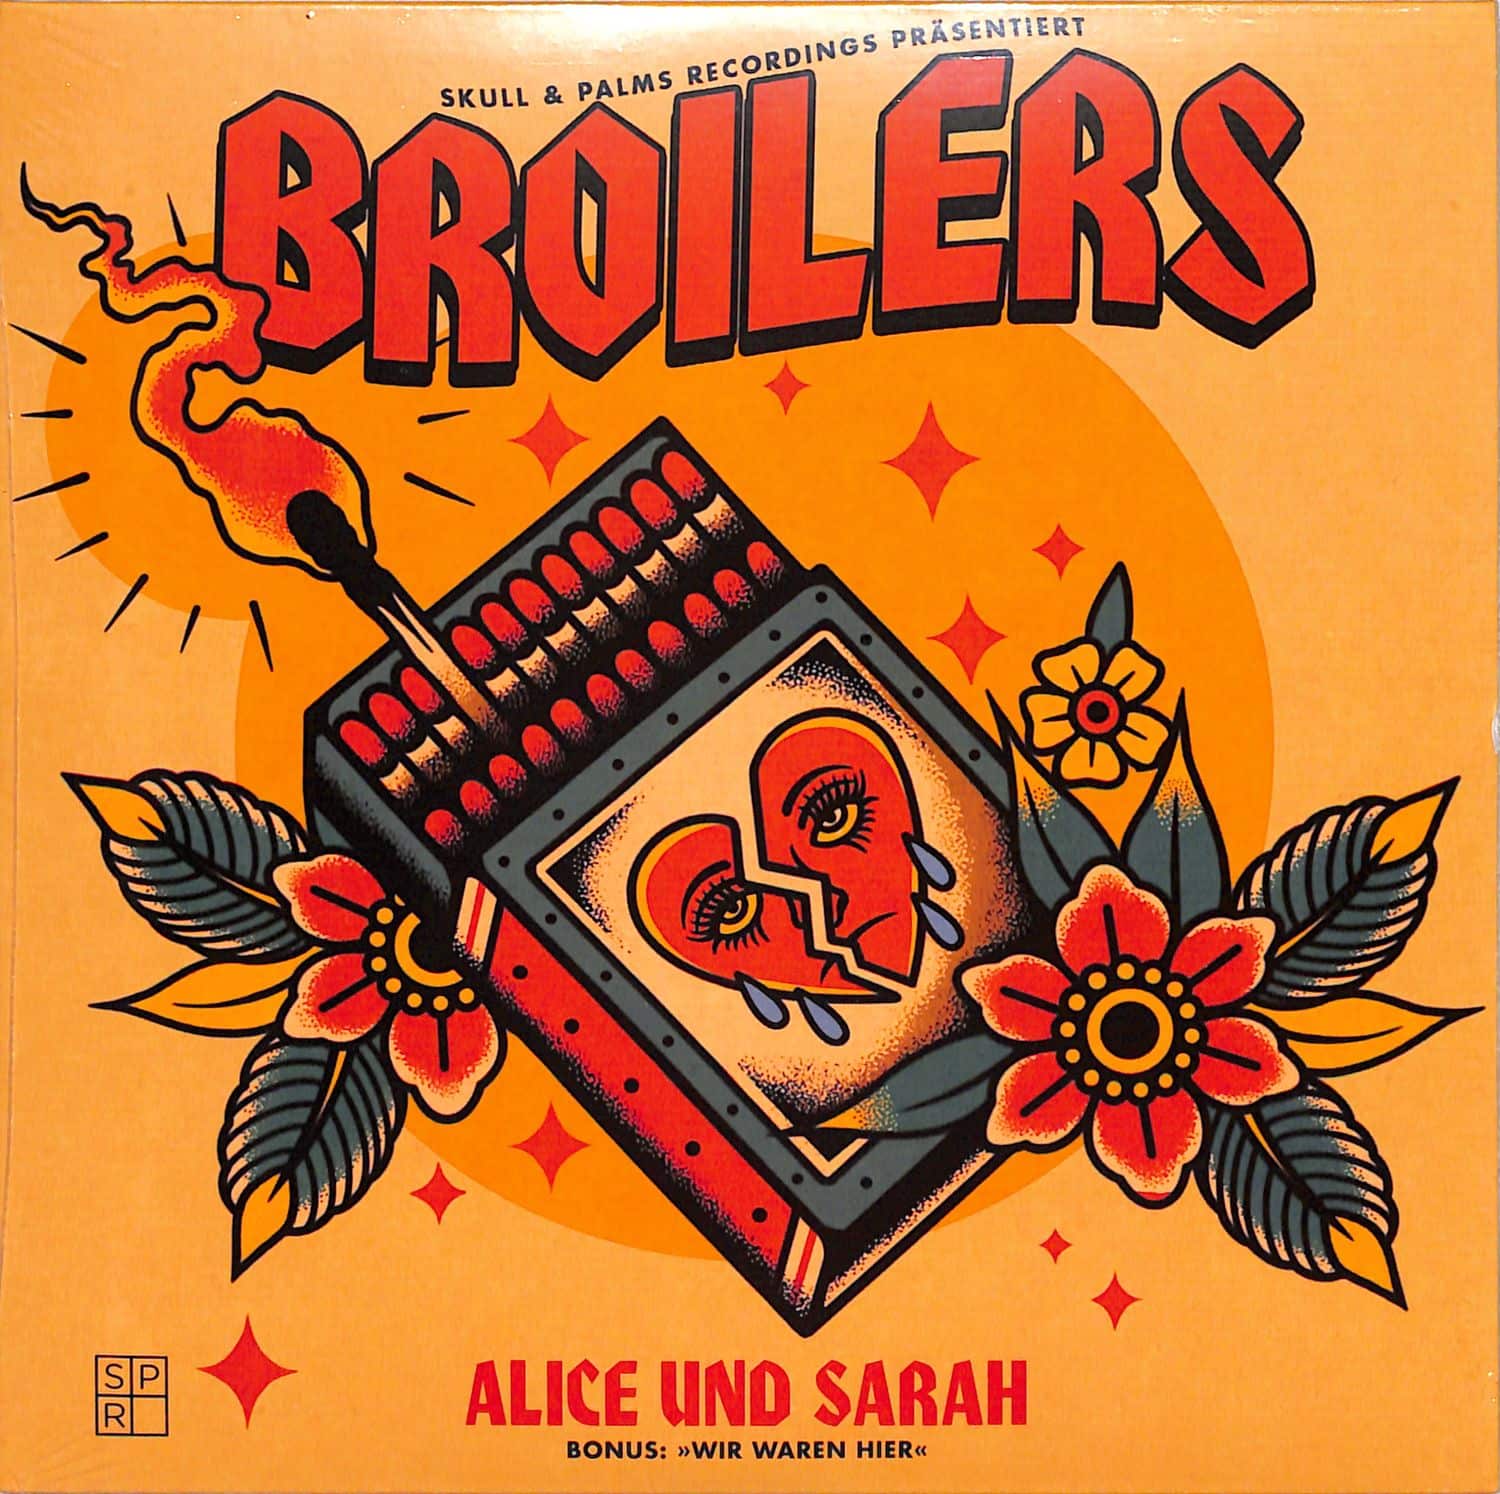 Broilers - ALICE UND SARAH 